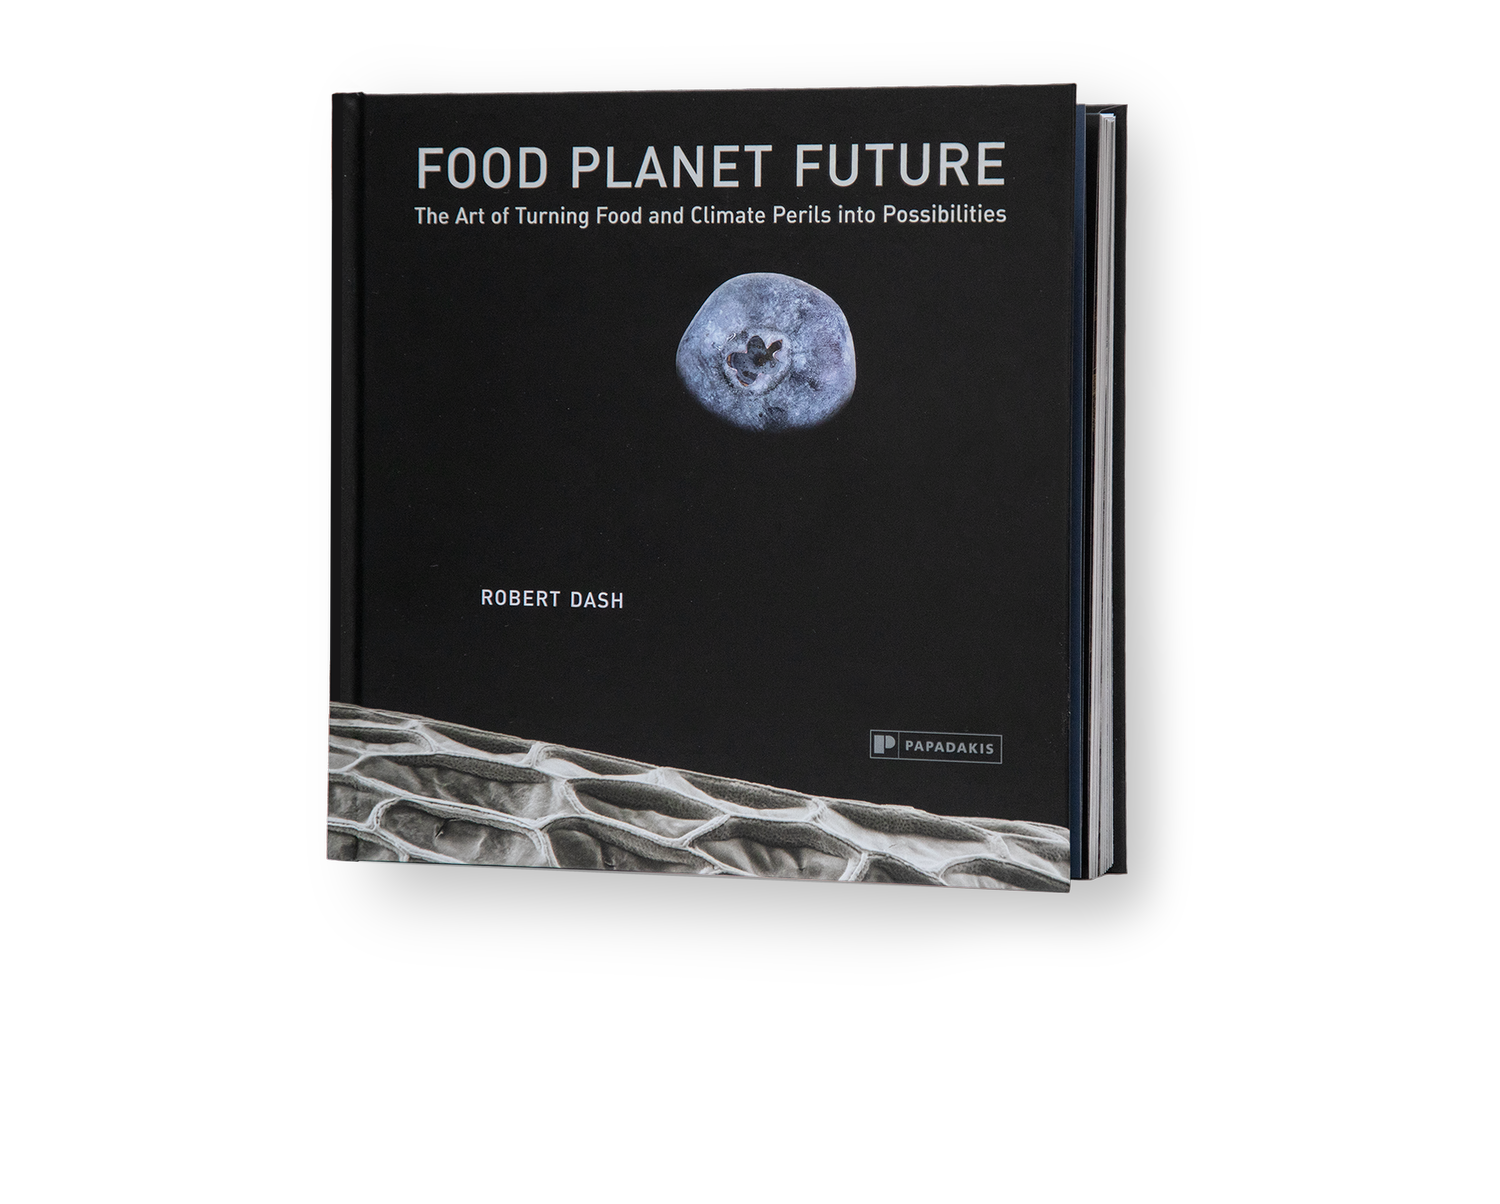 FOOD PLANET FUTURE